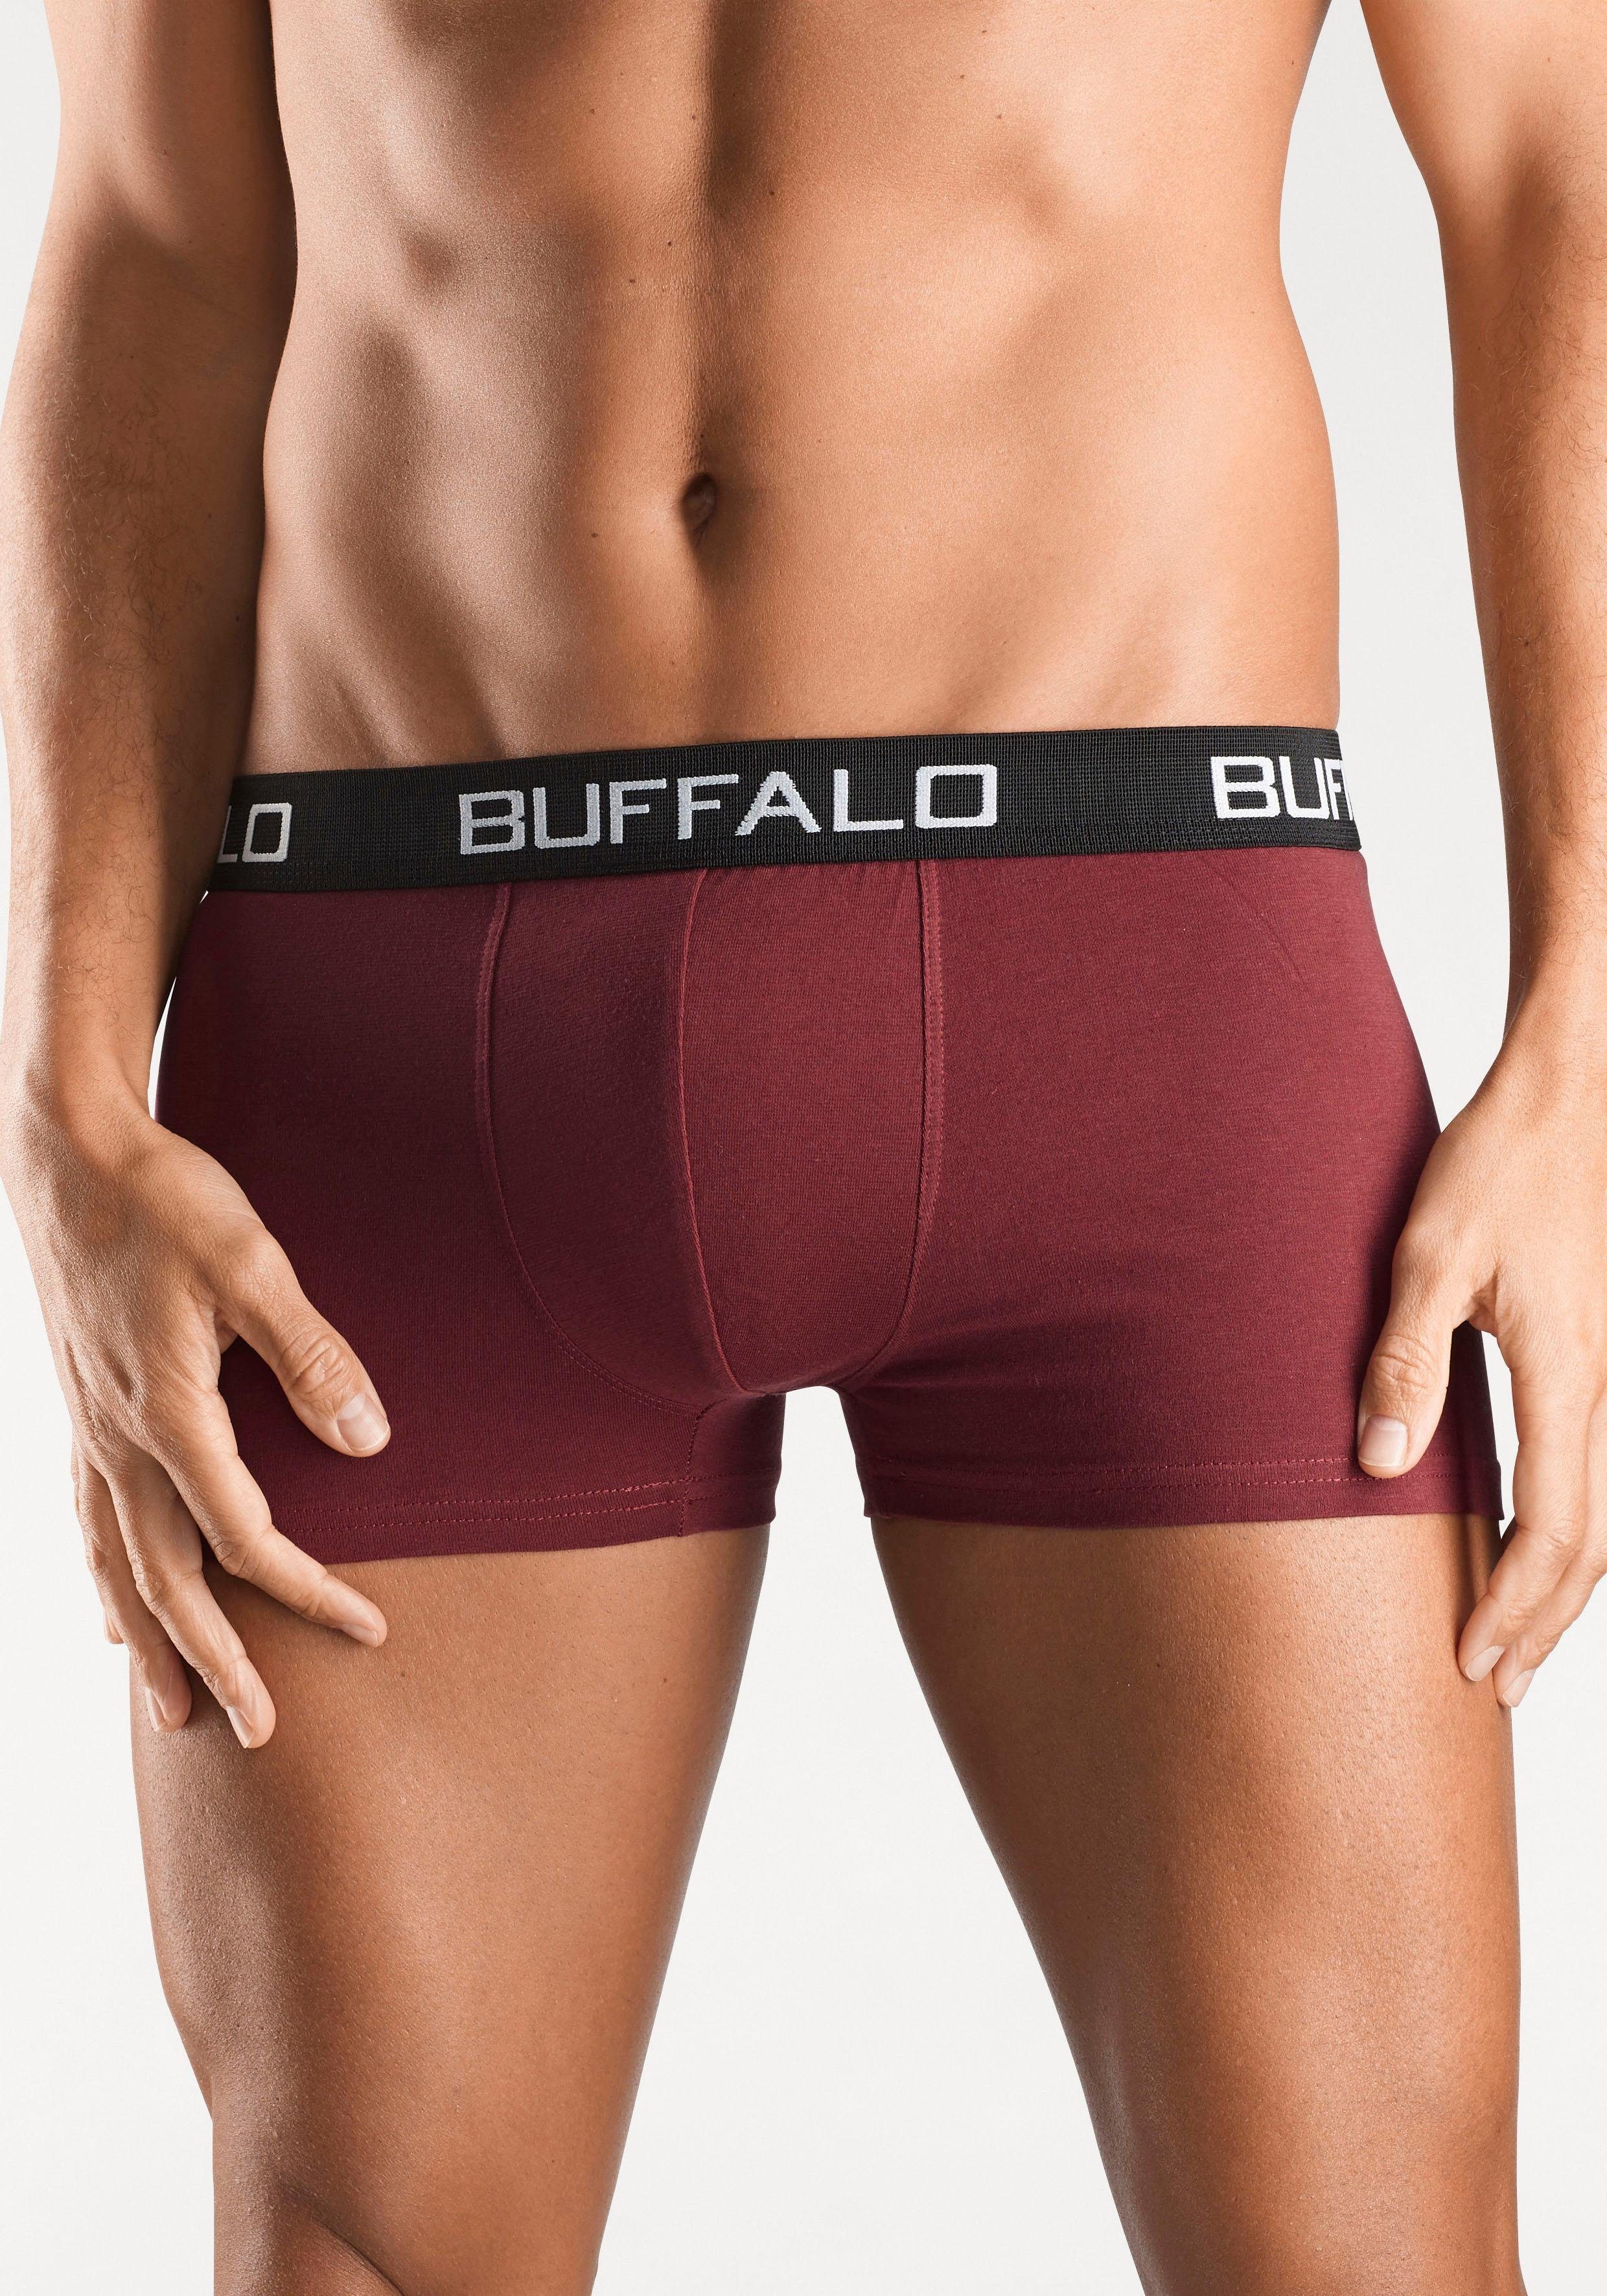 Buffalo Boxer (Packung, 4-St) bordeaux, Retro khaki unifarbene petrol, Pants grau